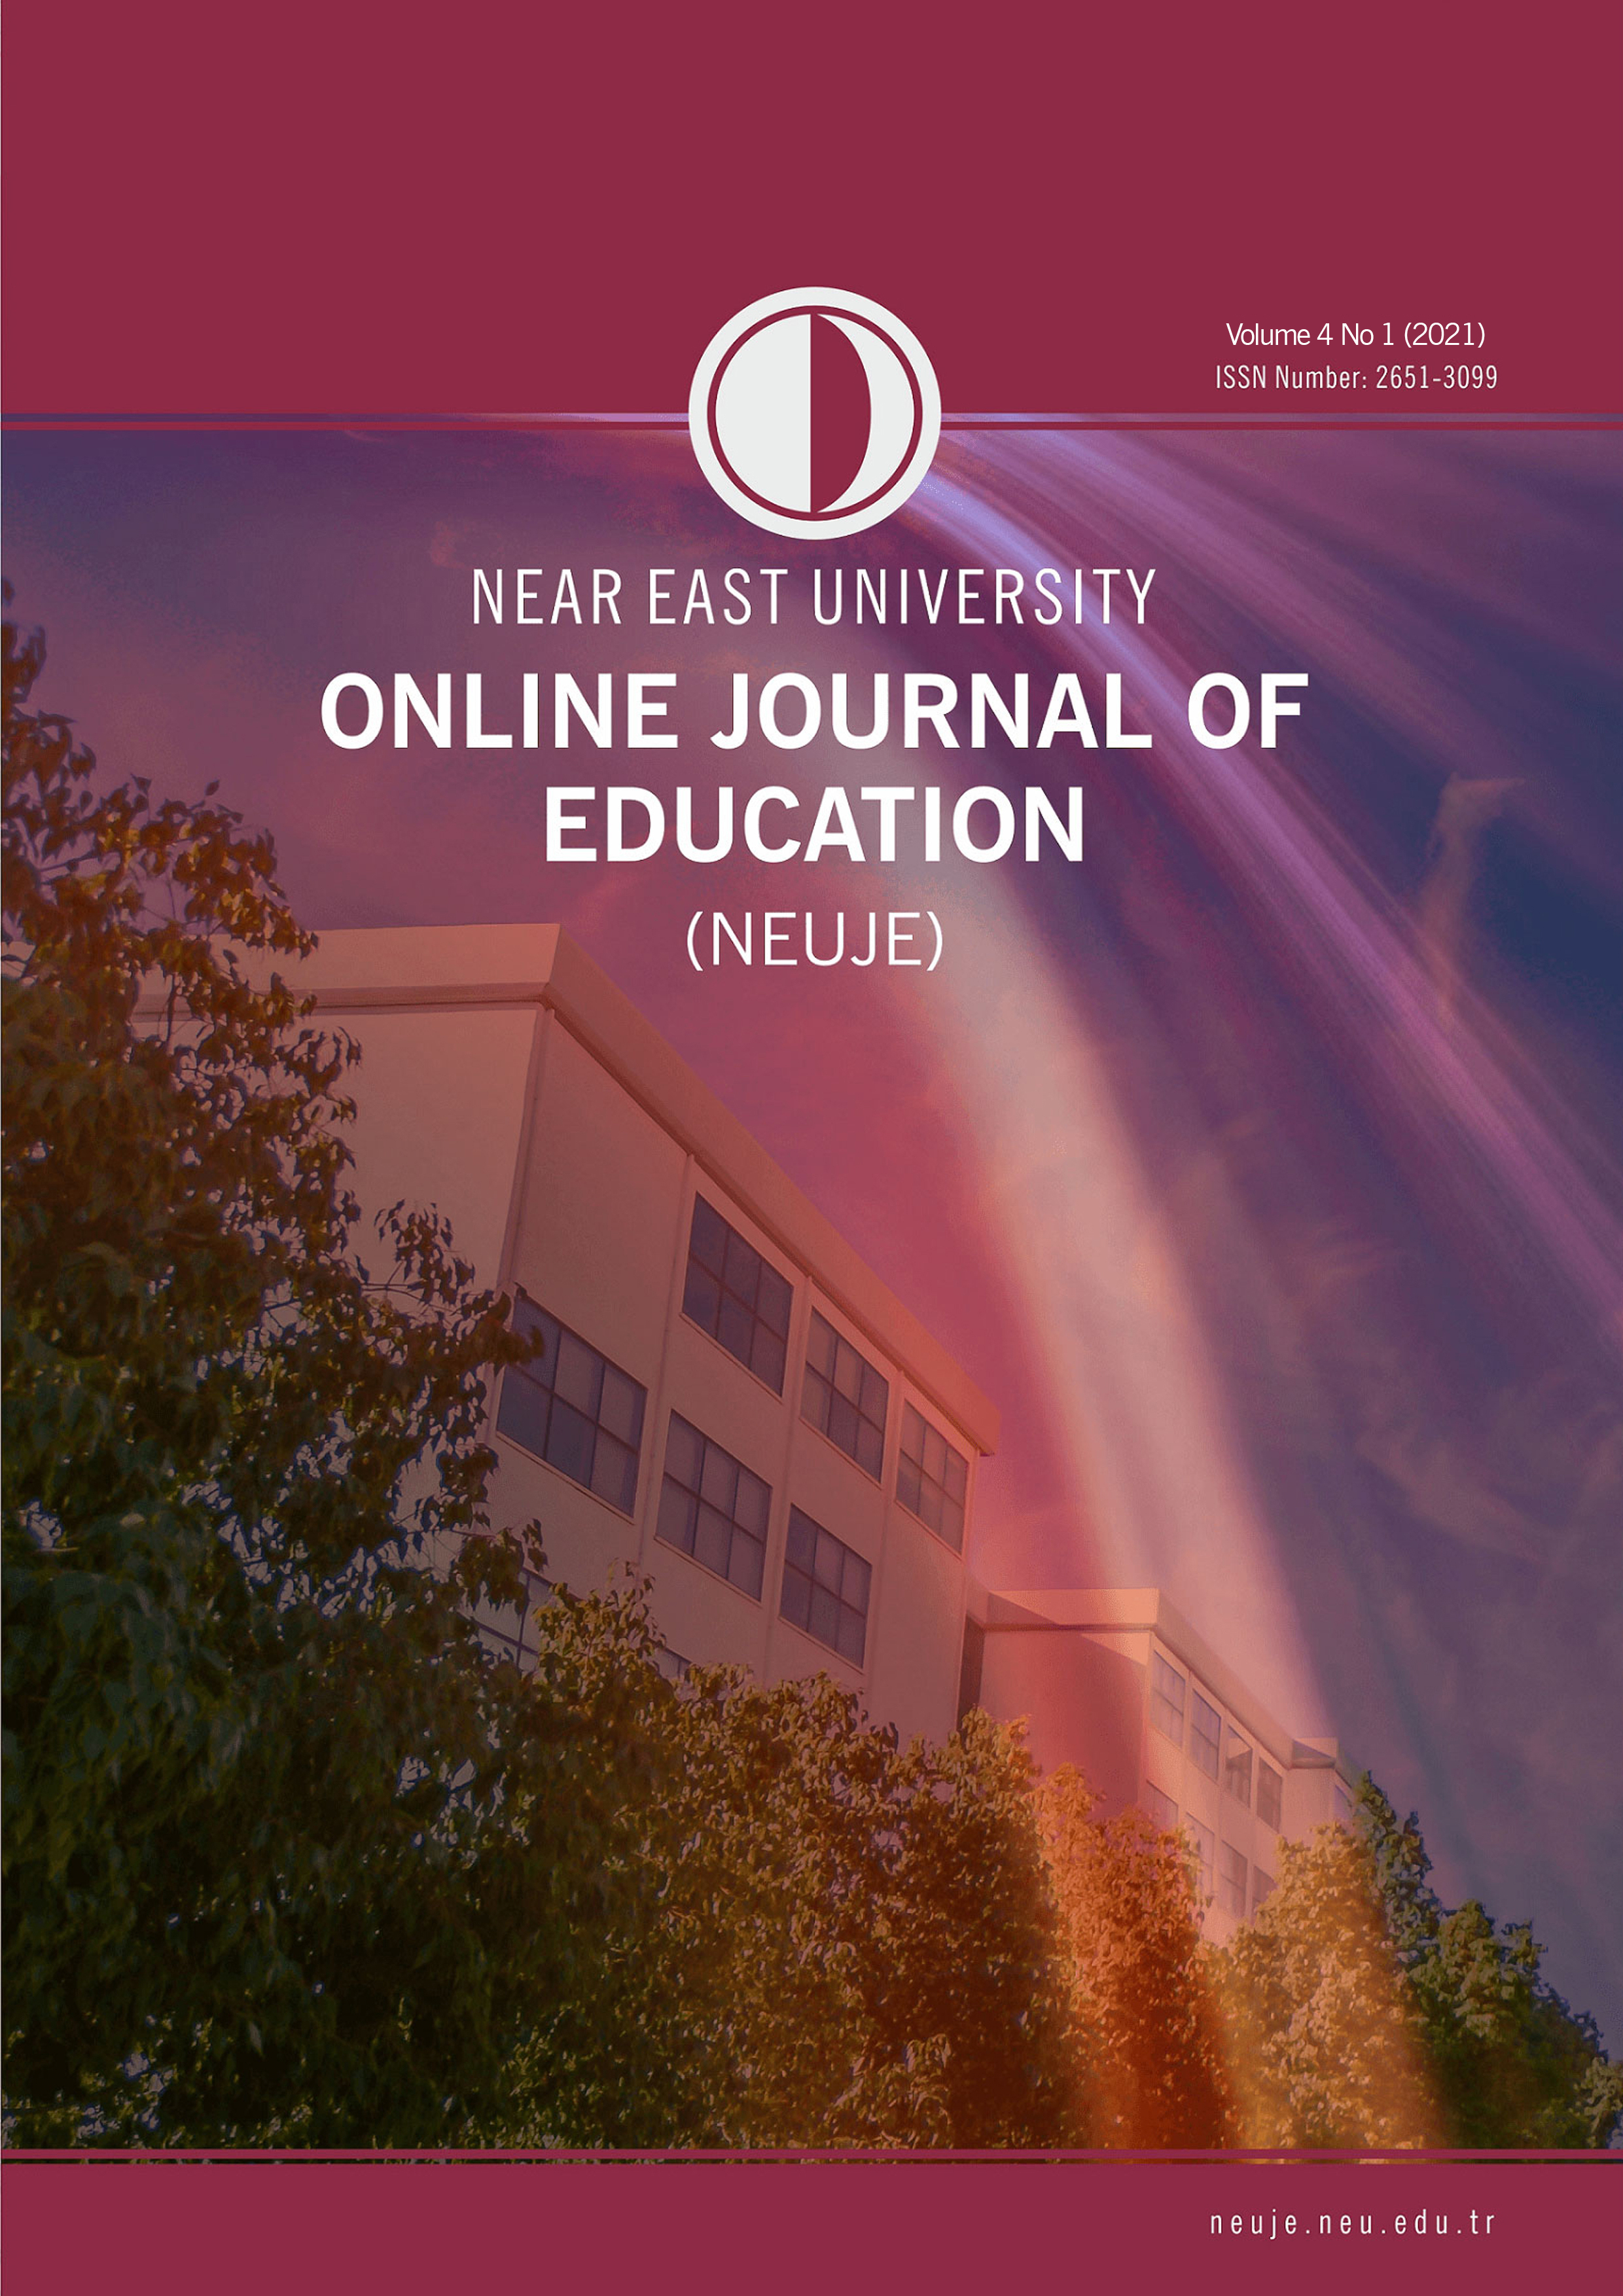 					View Vol. 4 No. 1 (2021): Near East University Online Journal of Education - NEUJE
				